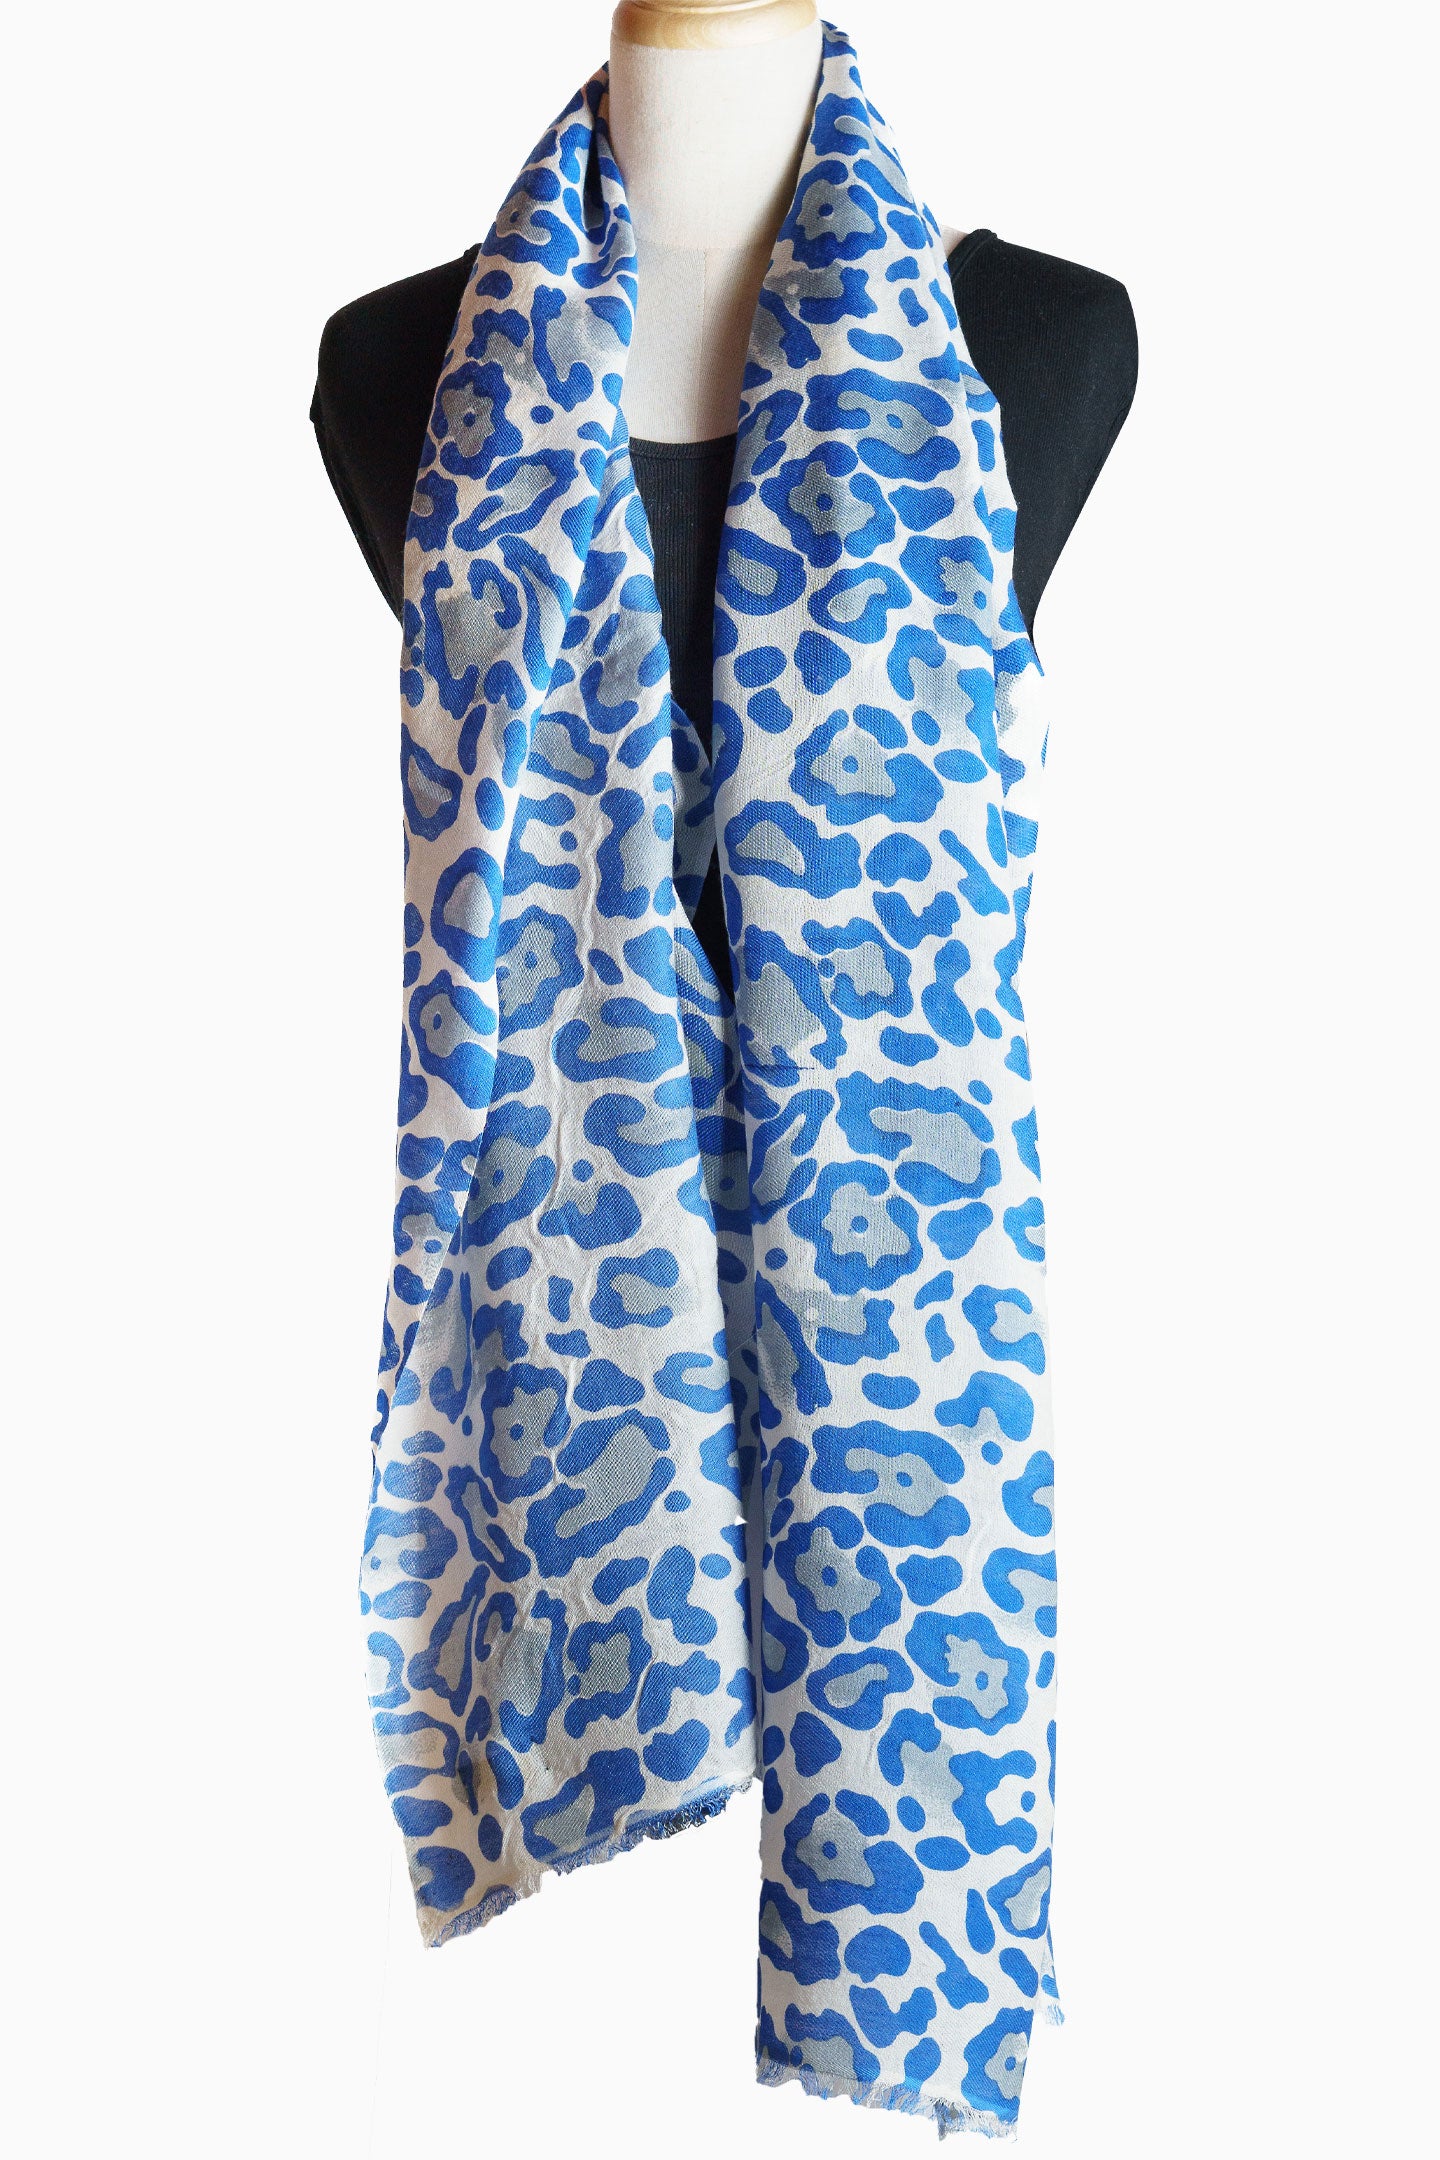 Blue Cheetah Silk Cashmere Scarf Stole